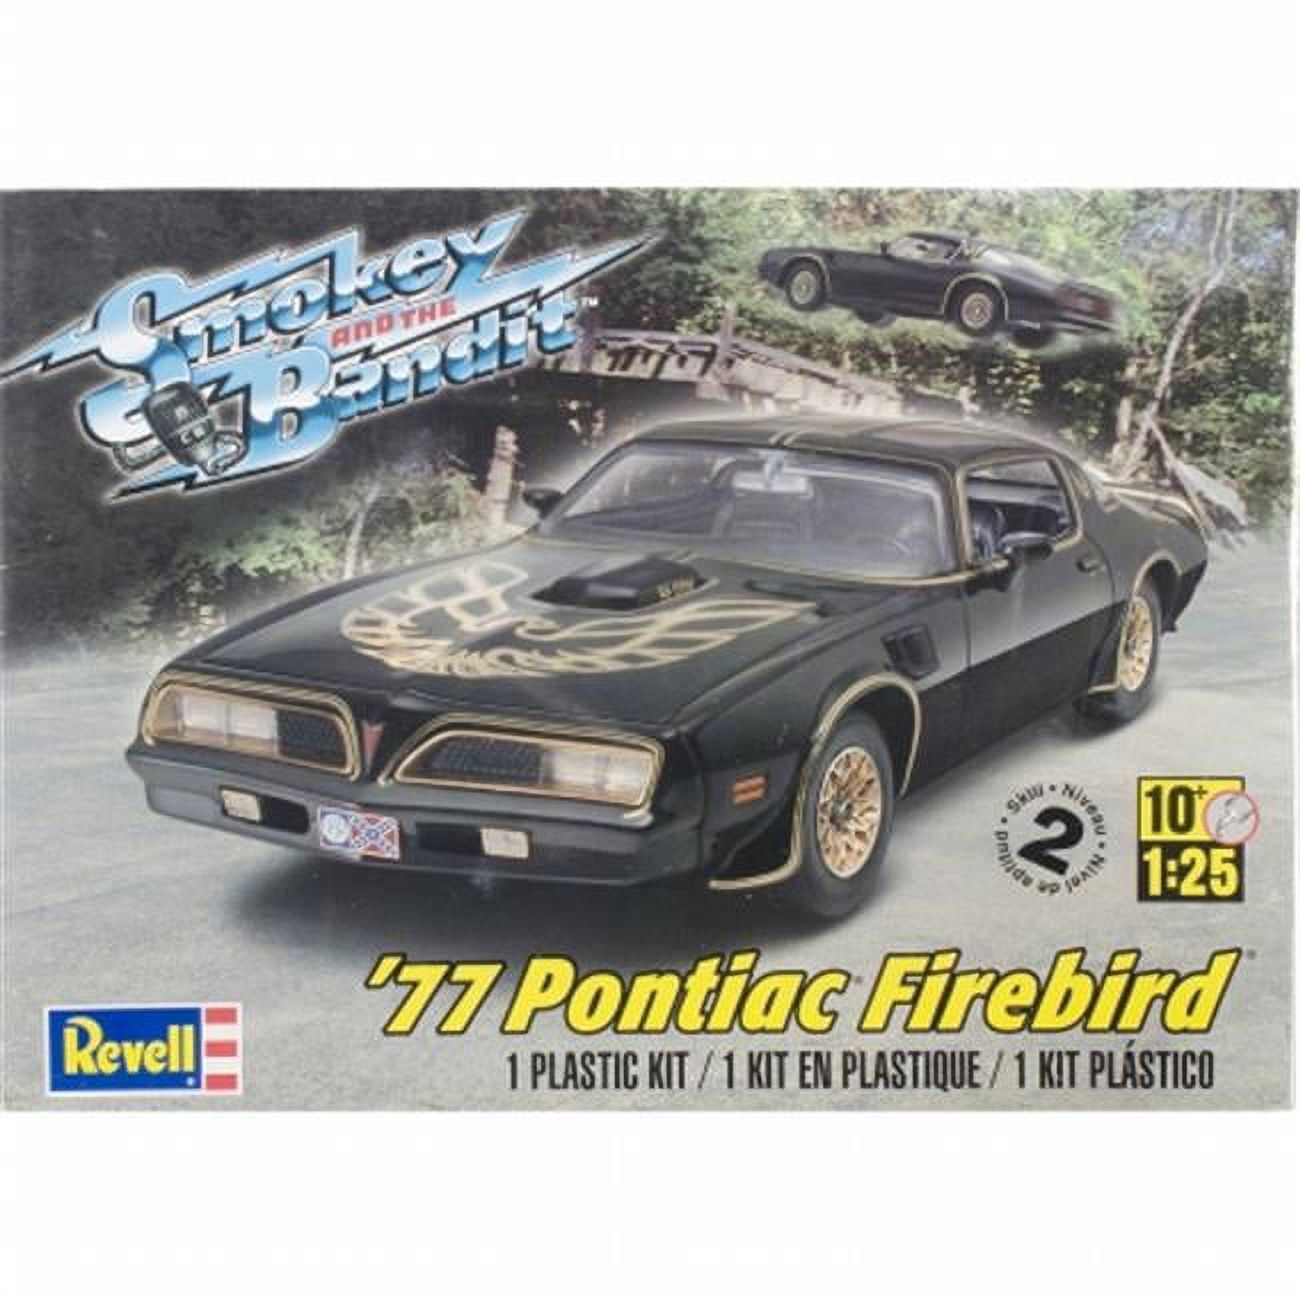 Revell - Smokey and the Bandit 1977 Pontiac Firebird Plastic Model Kit - image 1 of 5